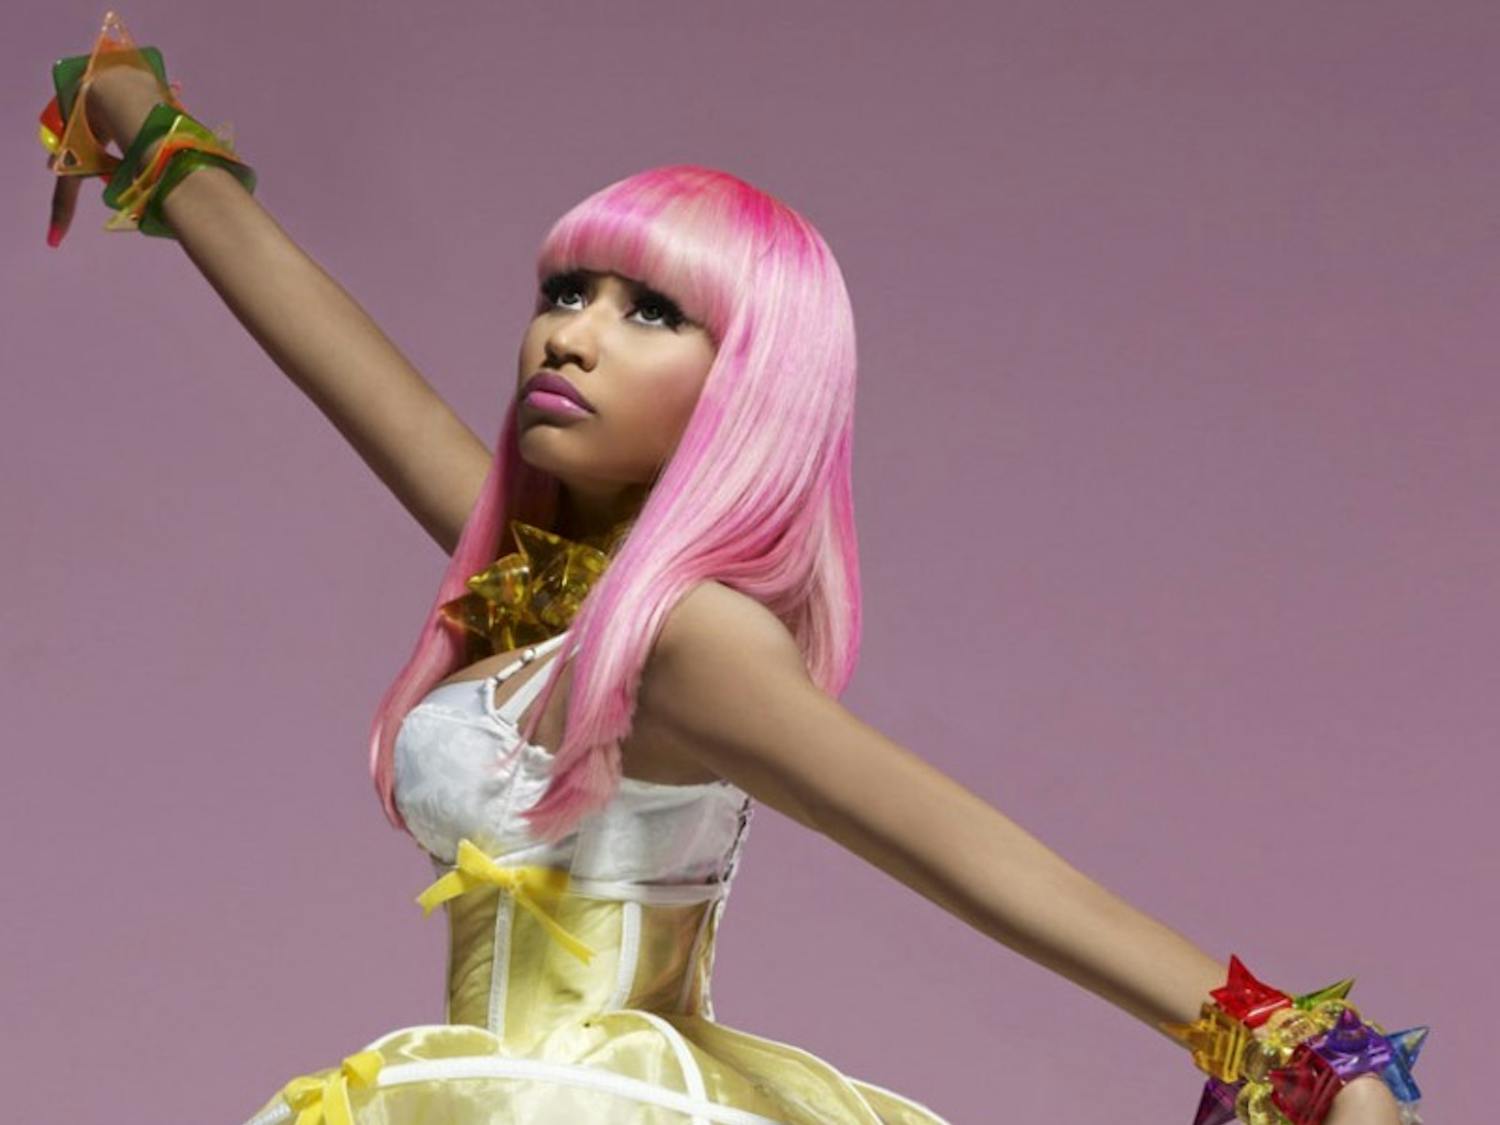 Minaj's creative potential sinks on 'Pink'